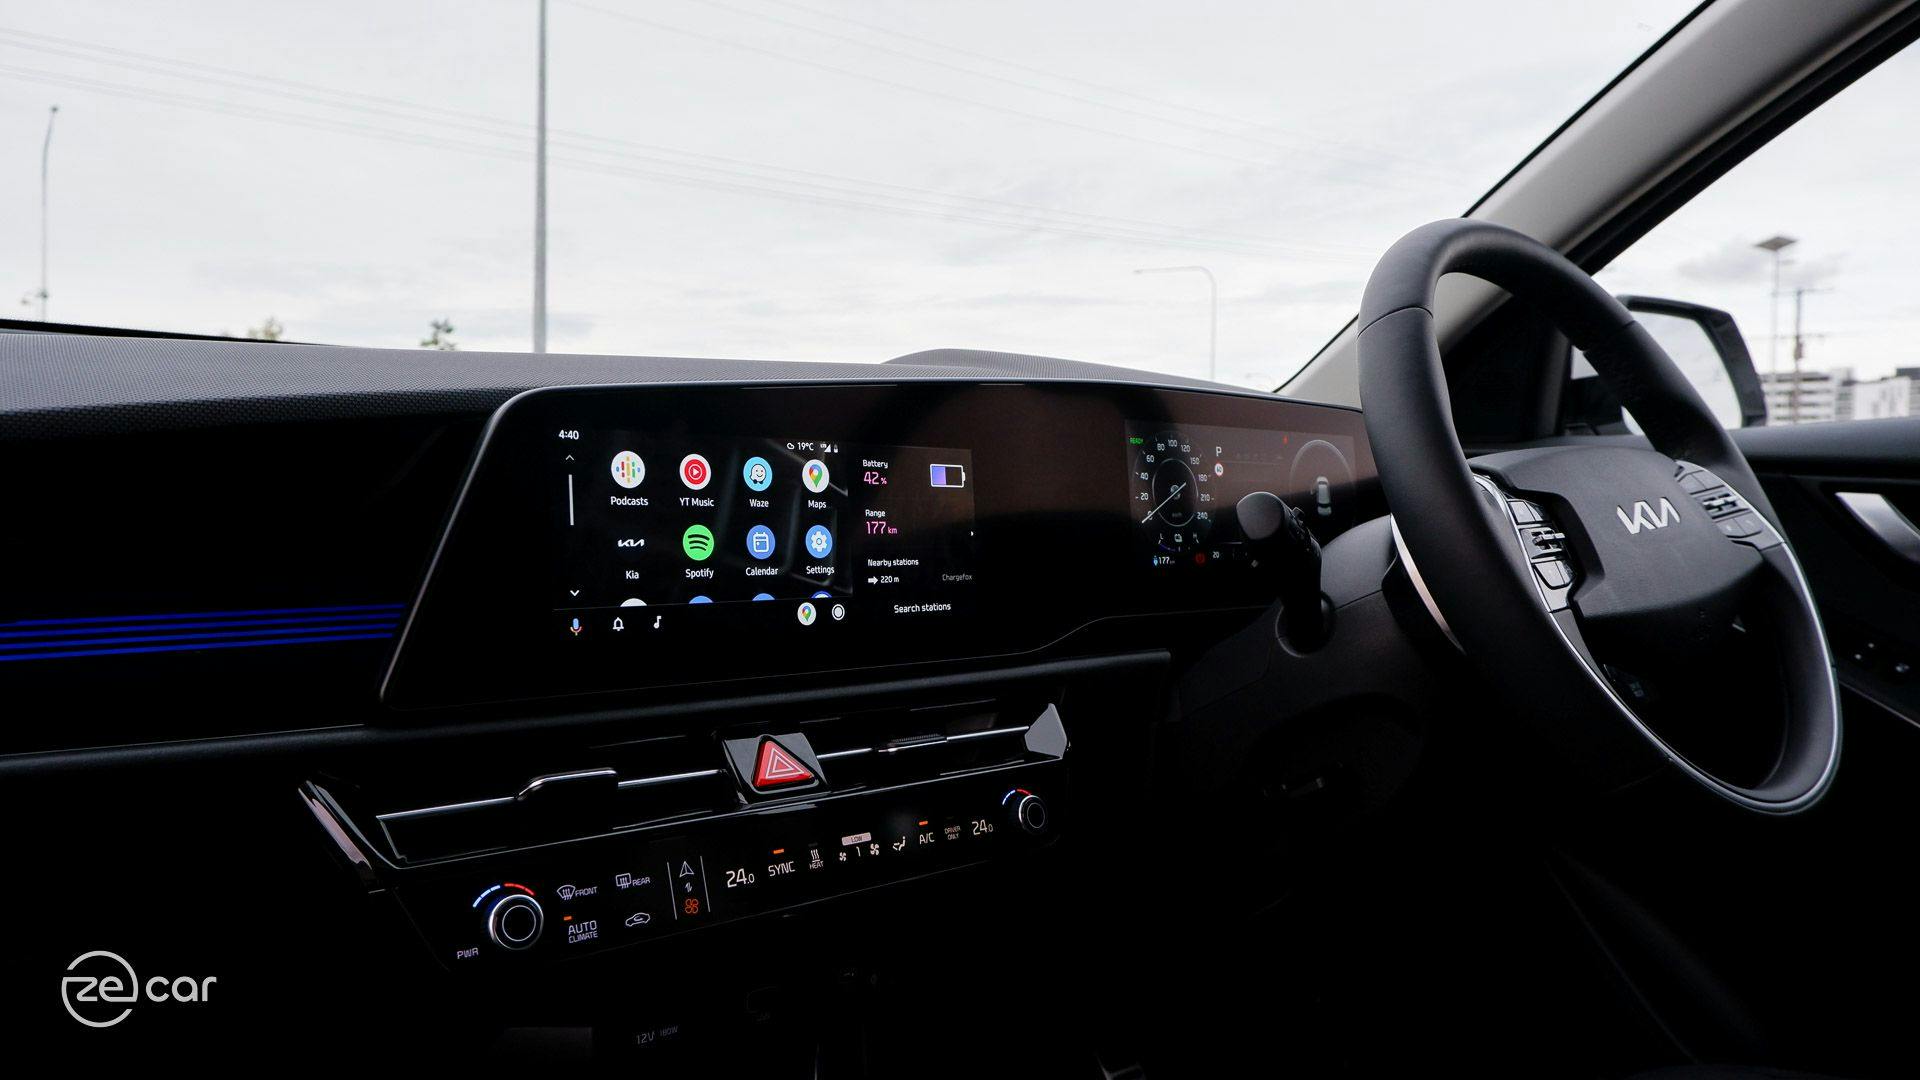 Kia Niro EV interior touchscreen with Android Auto and steering wheel